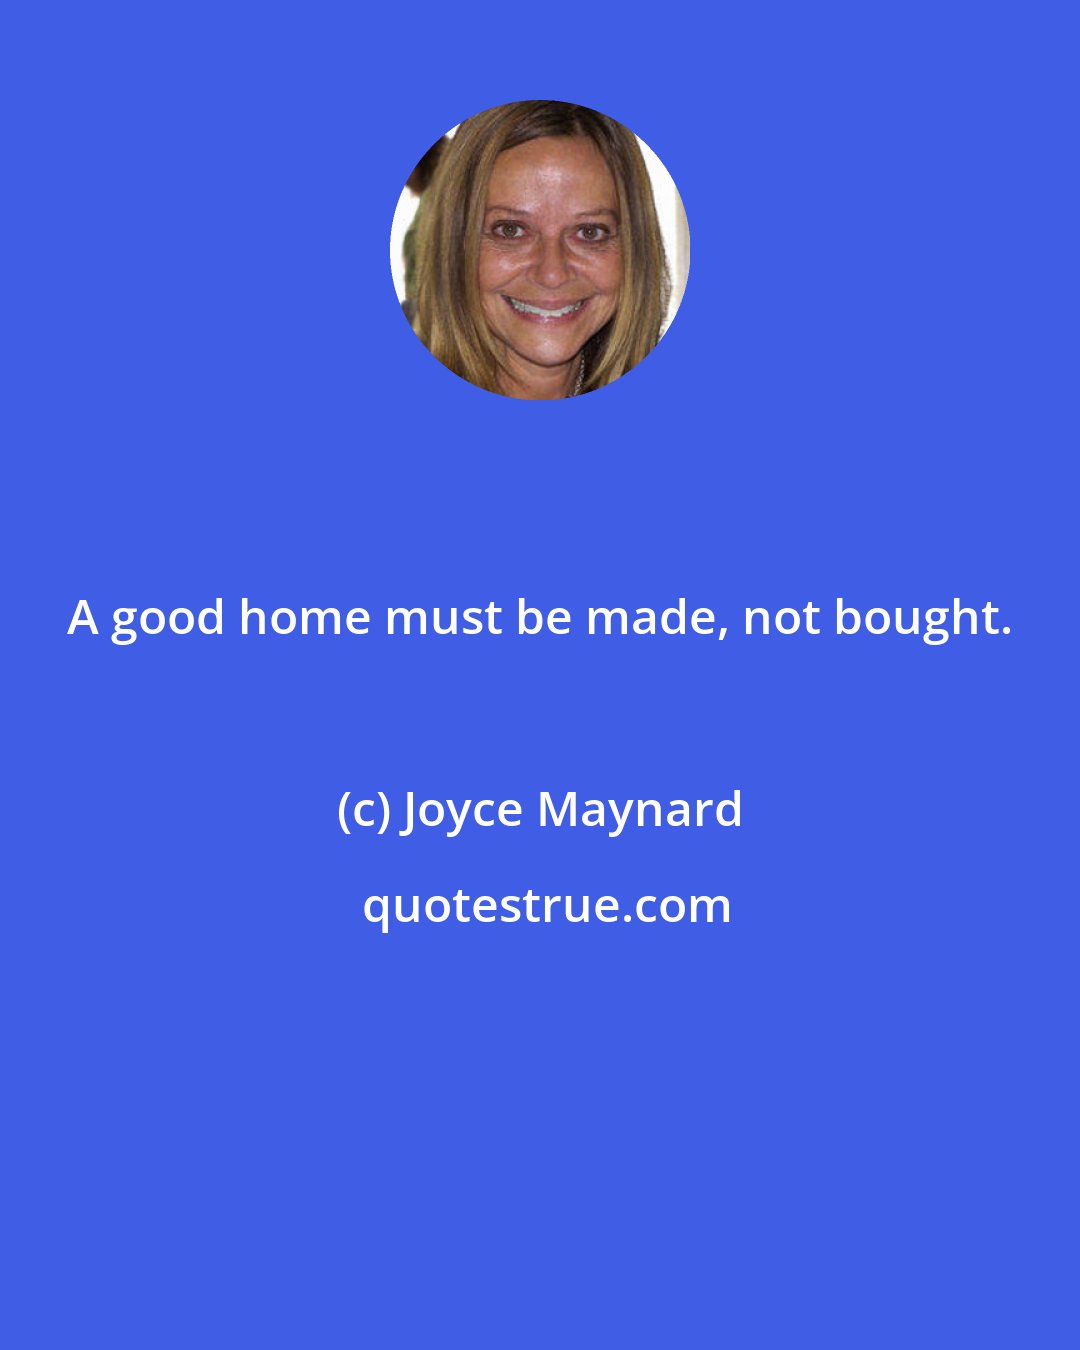 Joyce Maynard: A good home must be made, not bought.